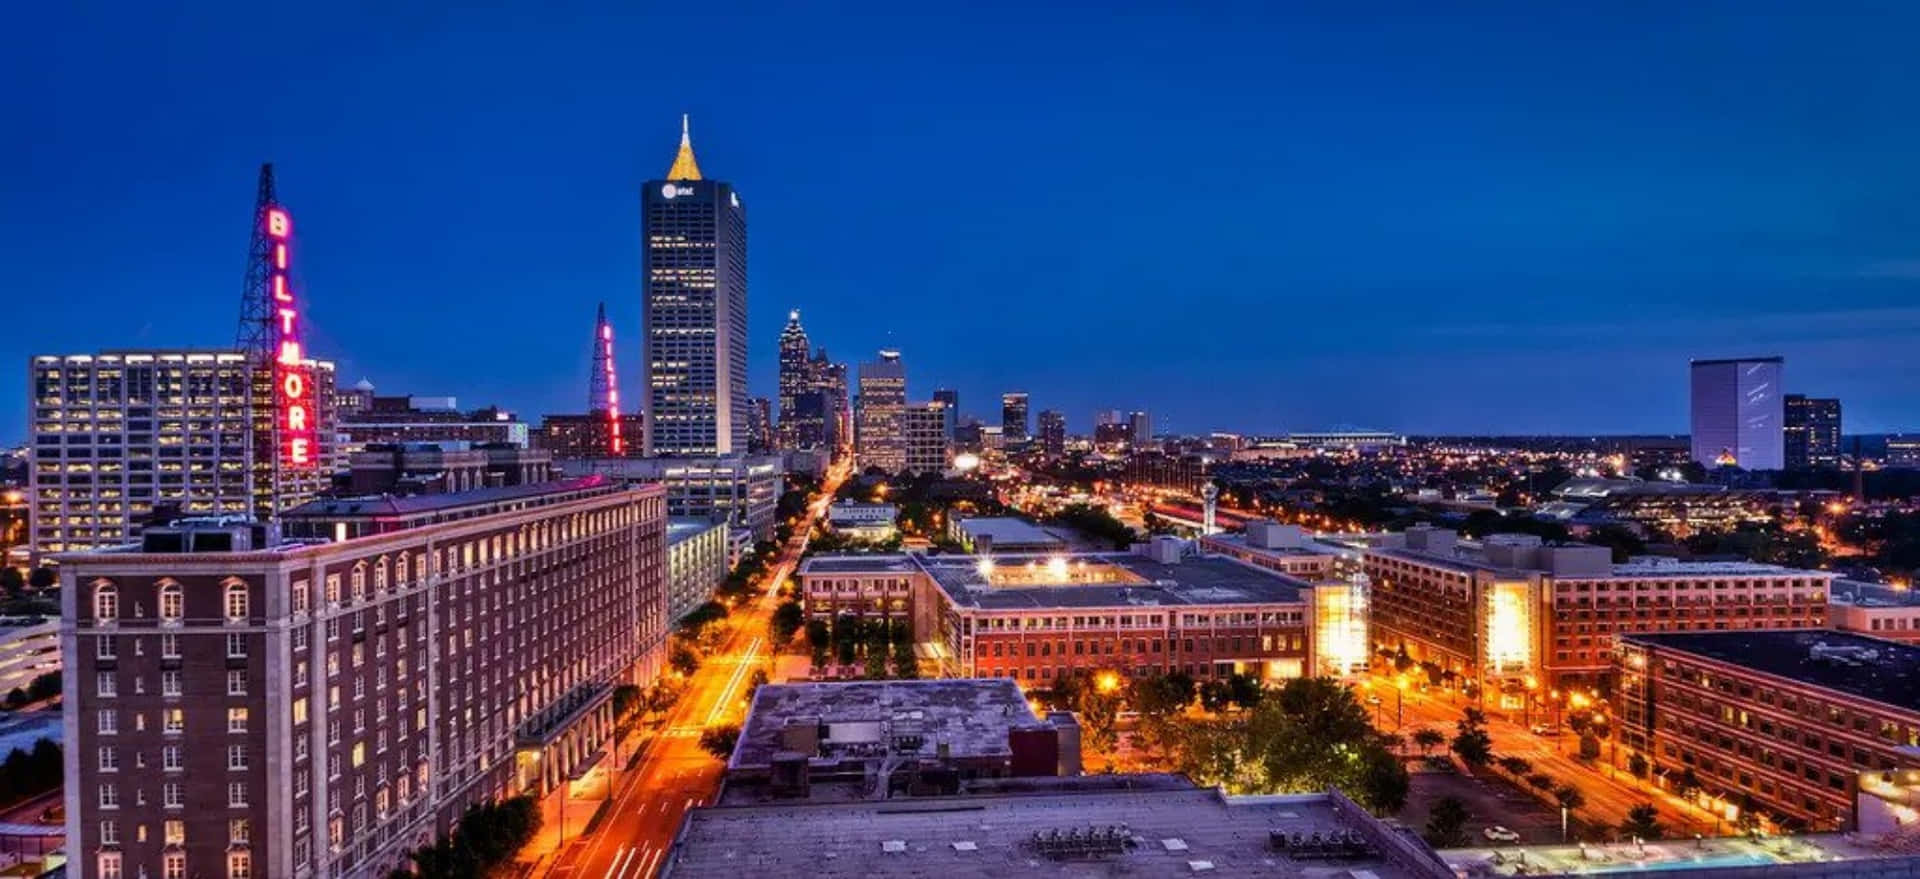 "The Amazing Skyscrapers in Atlanta, Georgia"